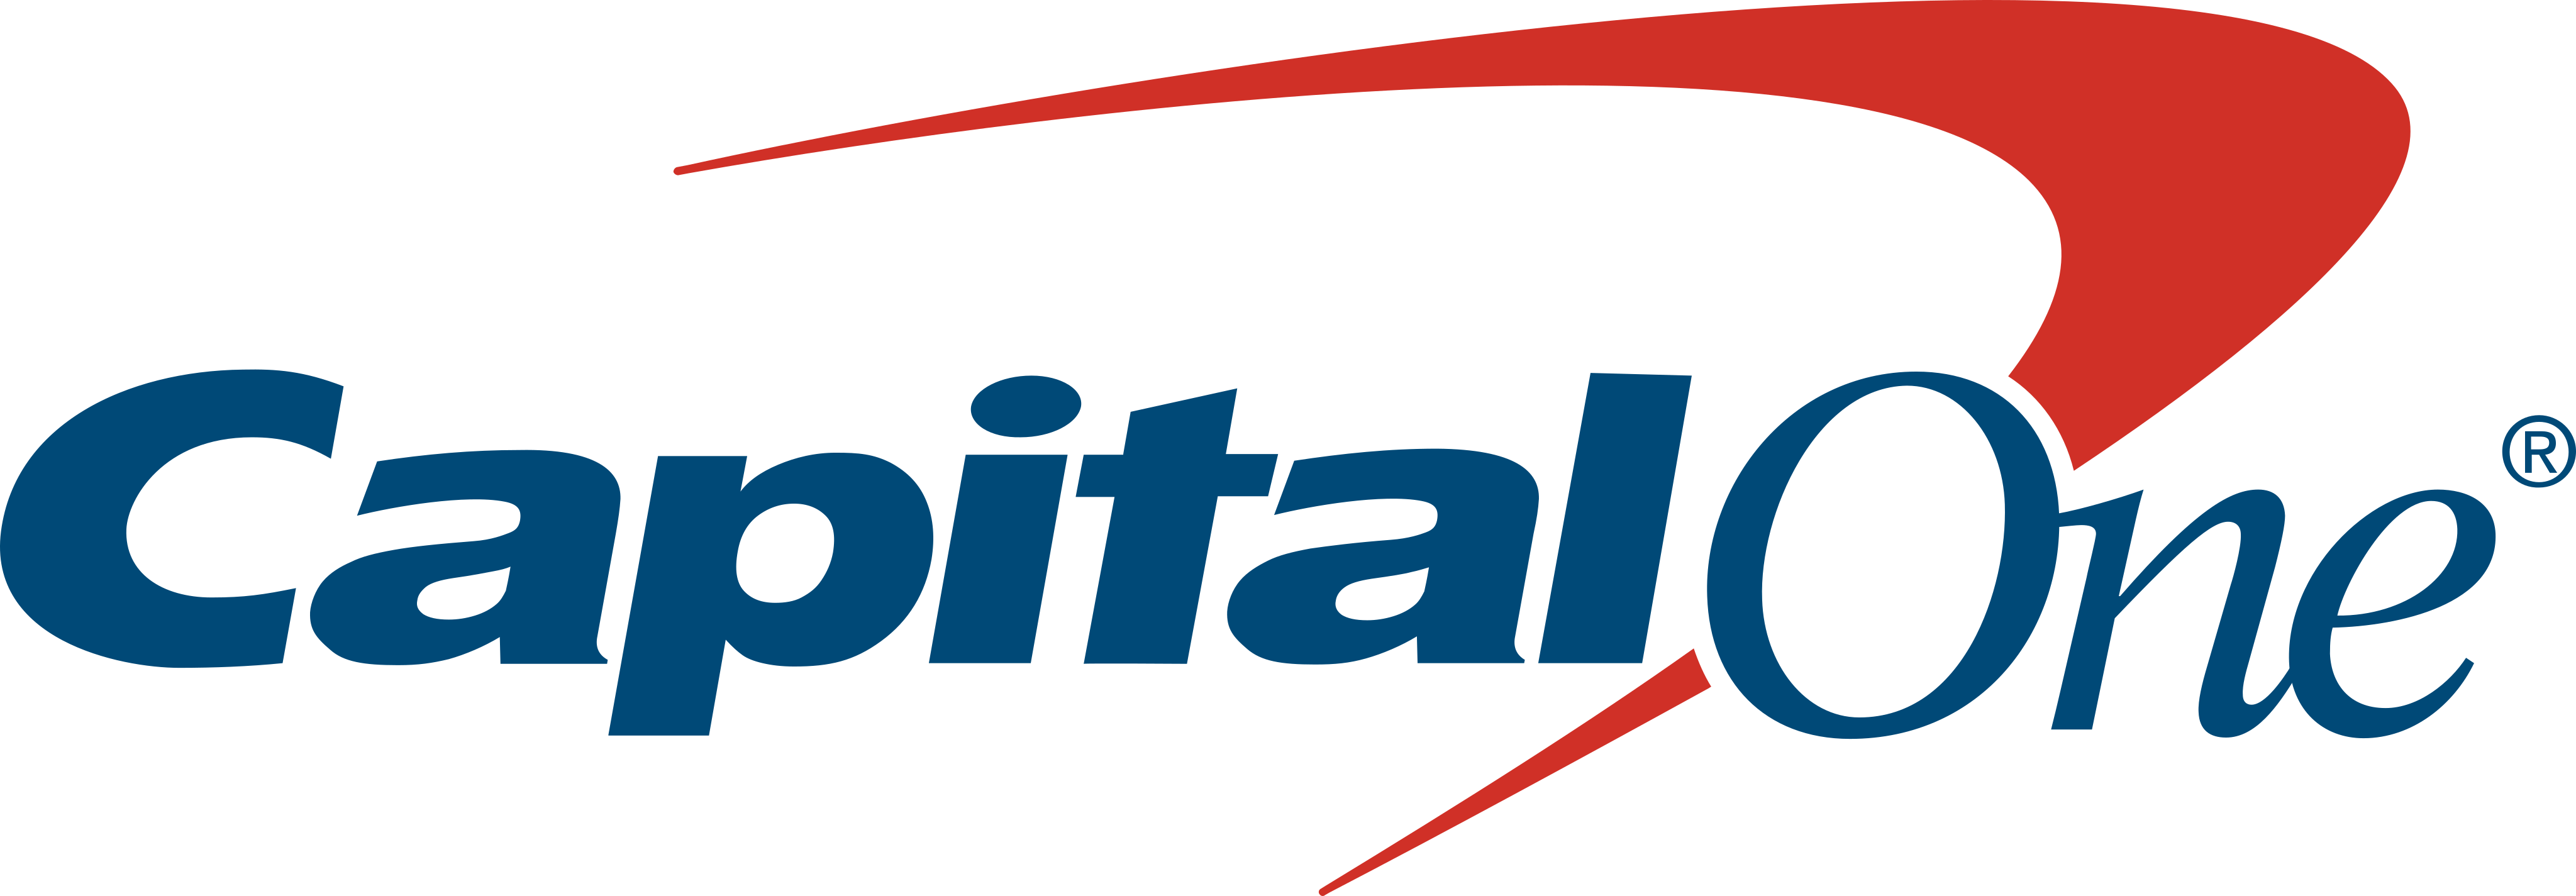 capital one logo - Capital One Logo